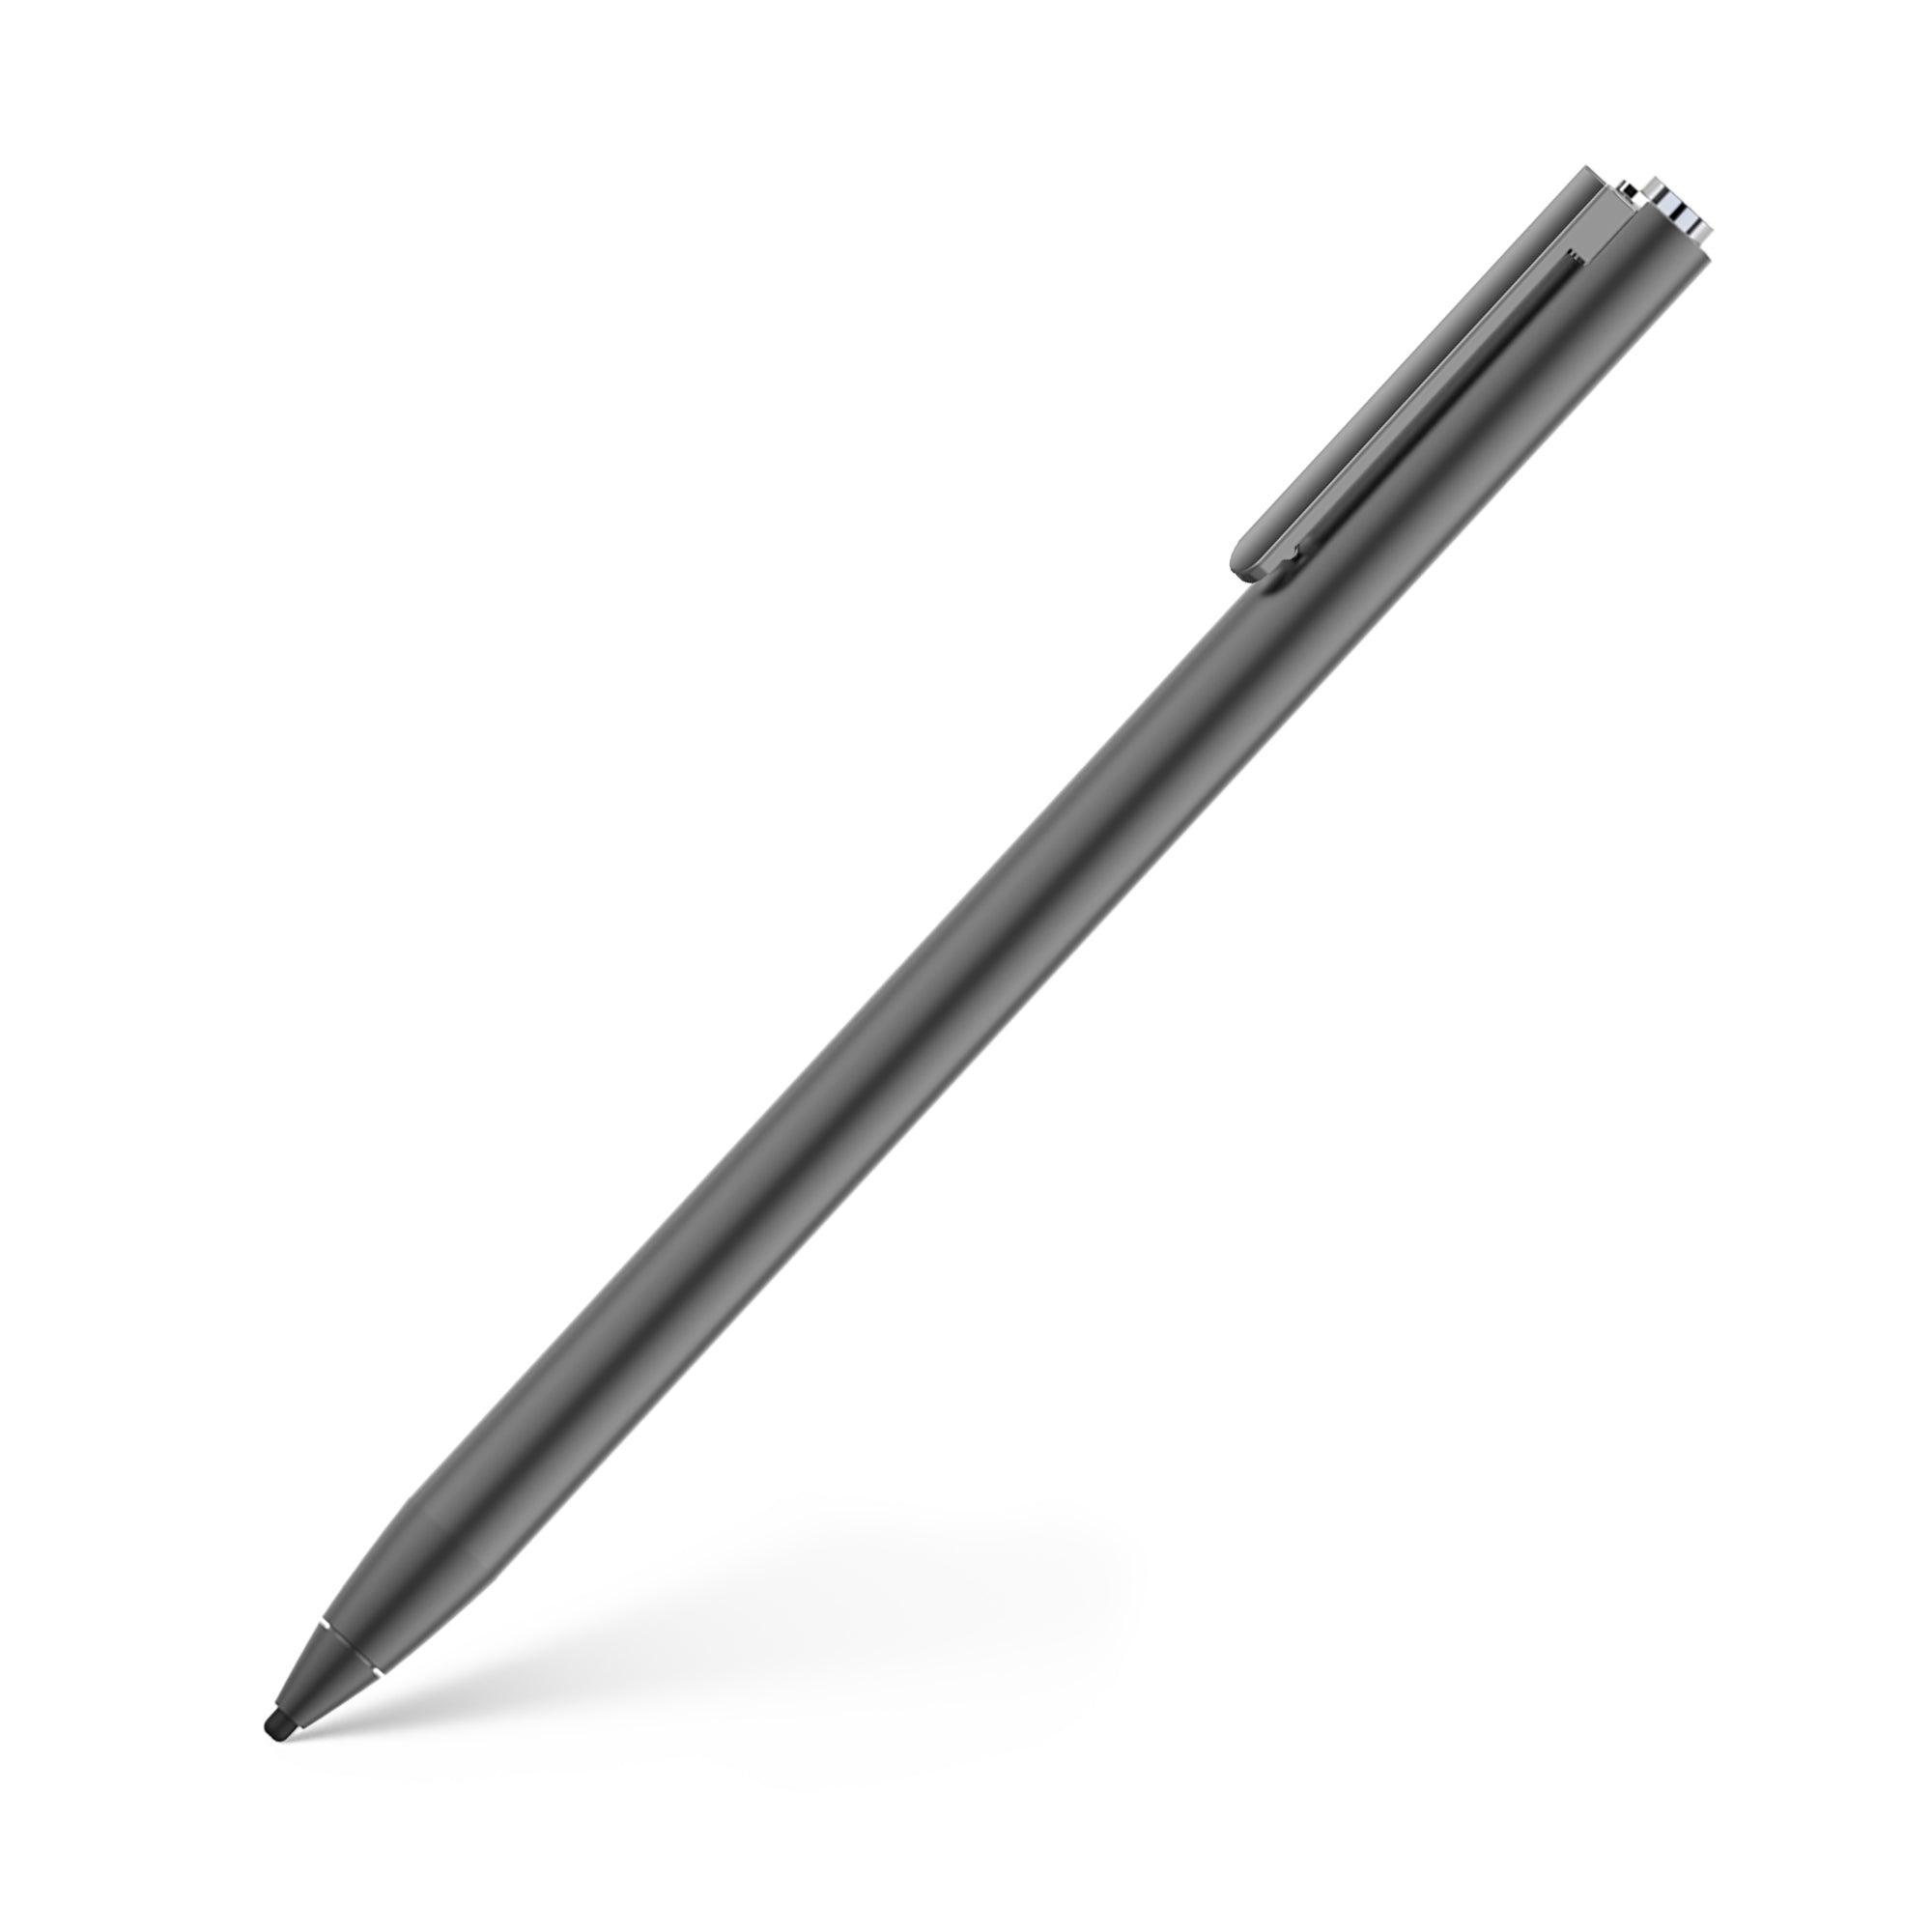 قلم آيباد بوضعين تشغيل وشحن مغناطيسي بلون أسود Dash 4 Fine Point Stylus - Universal Digital Pen for Apple and Android Devices - Adonit